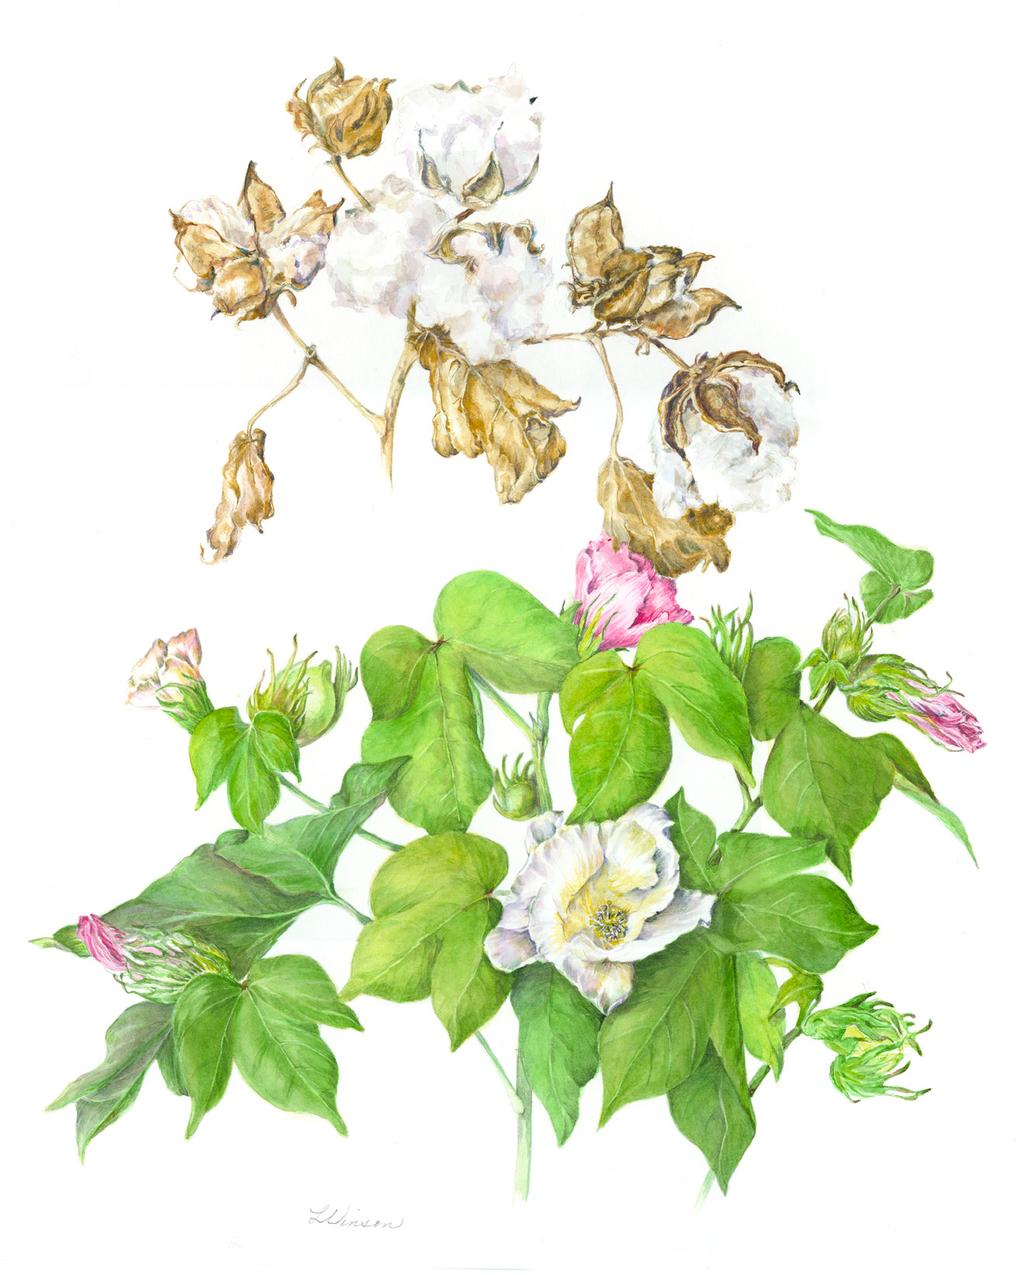 Cotton (Gossypium hirsutum), 2012, by Linda